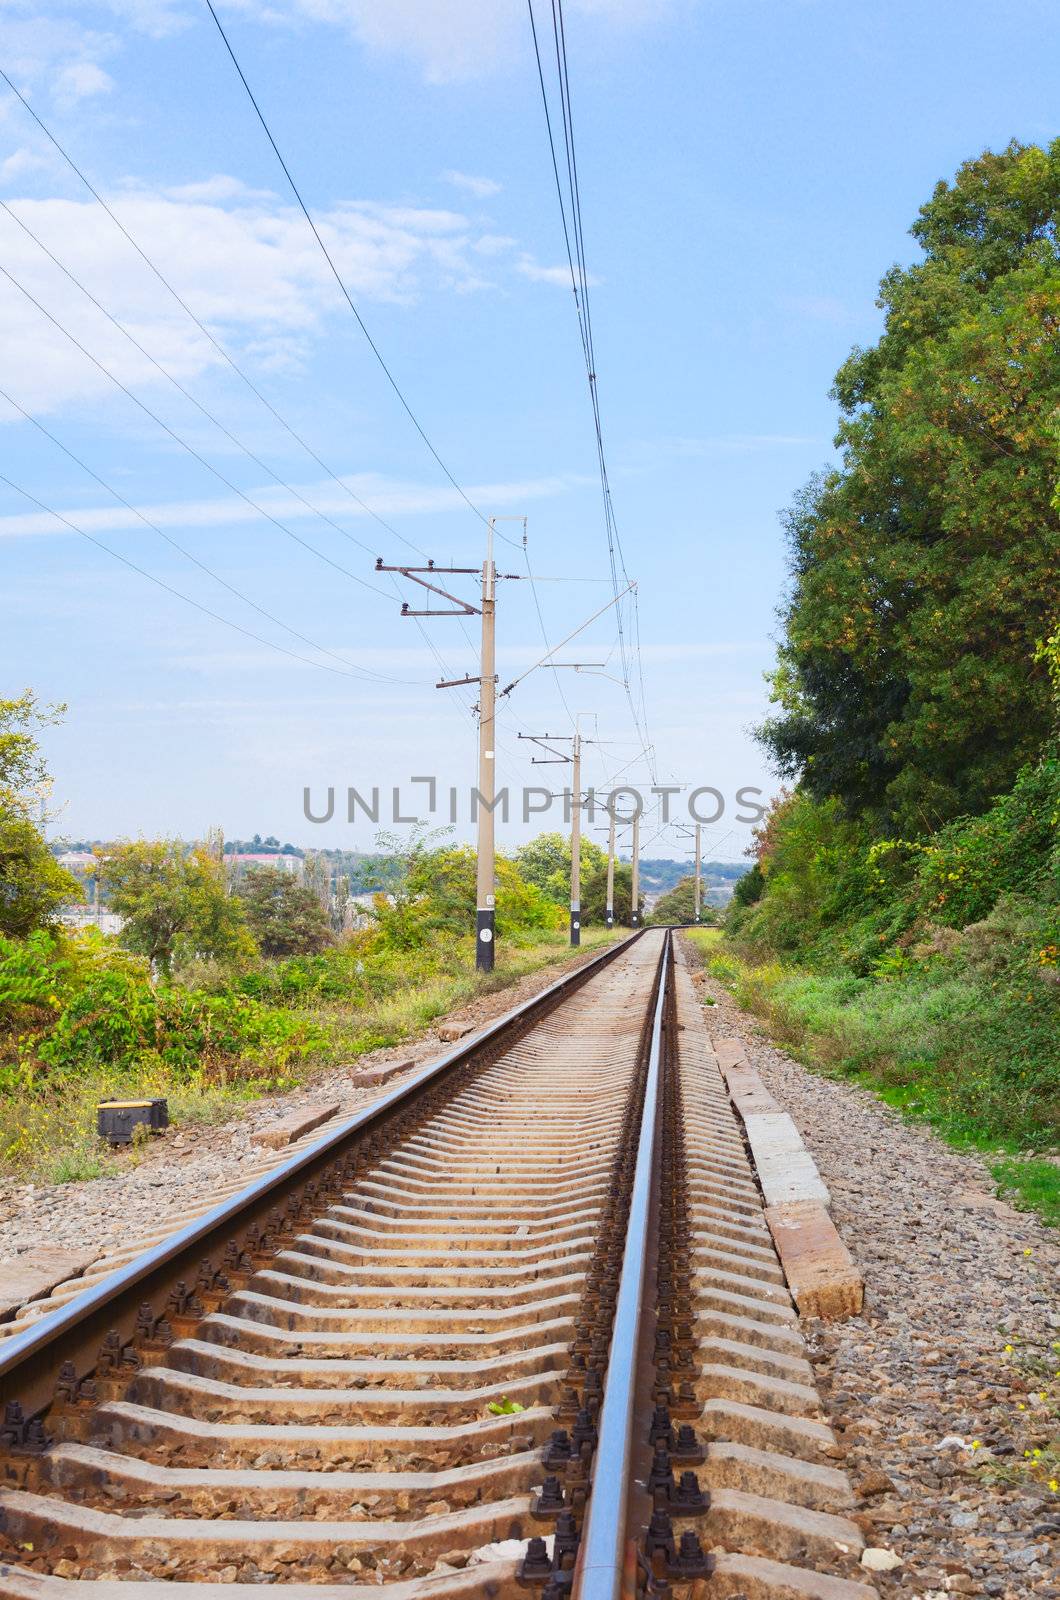 Railway track by Rinitka